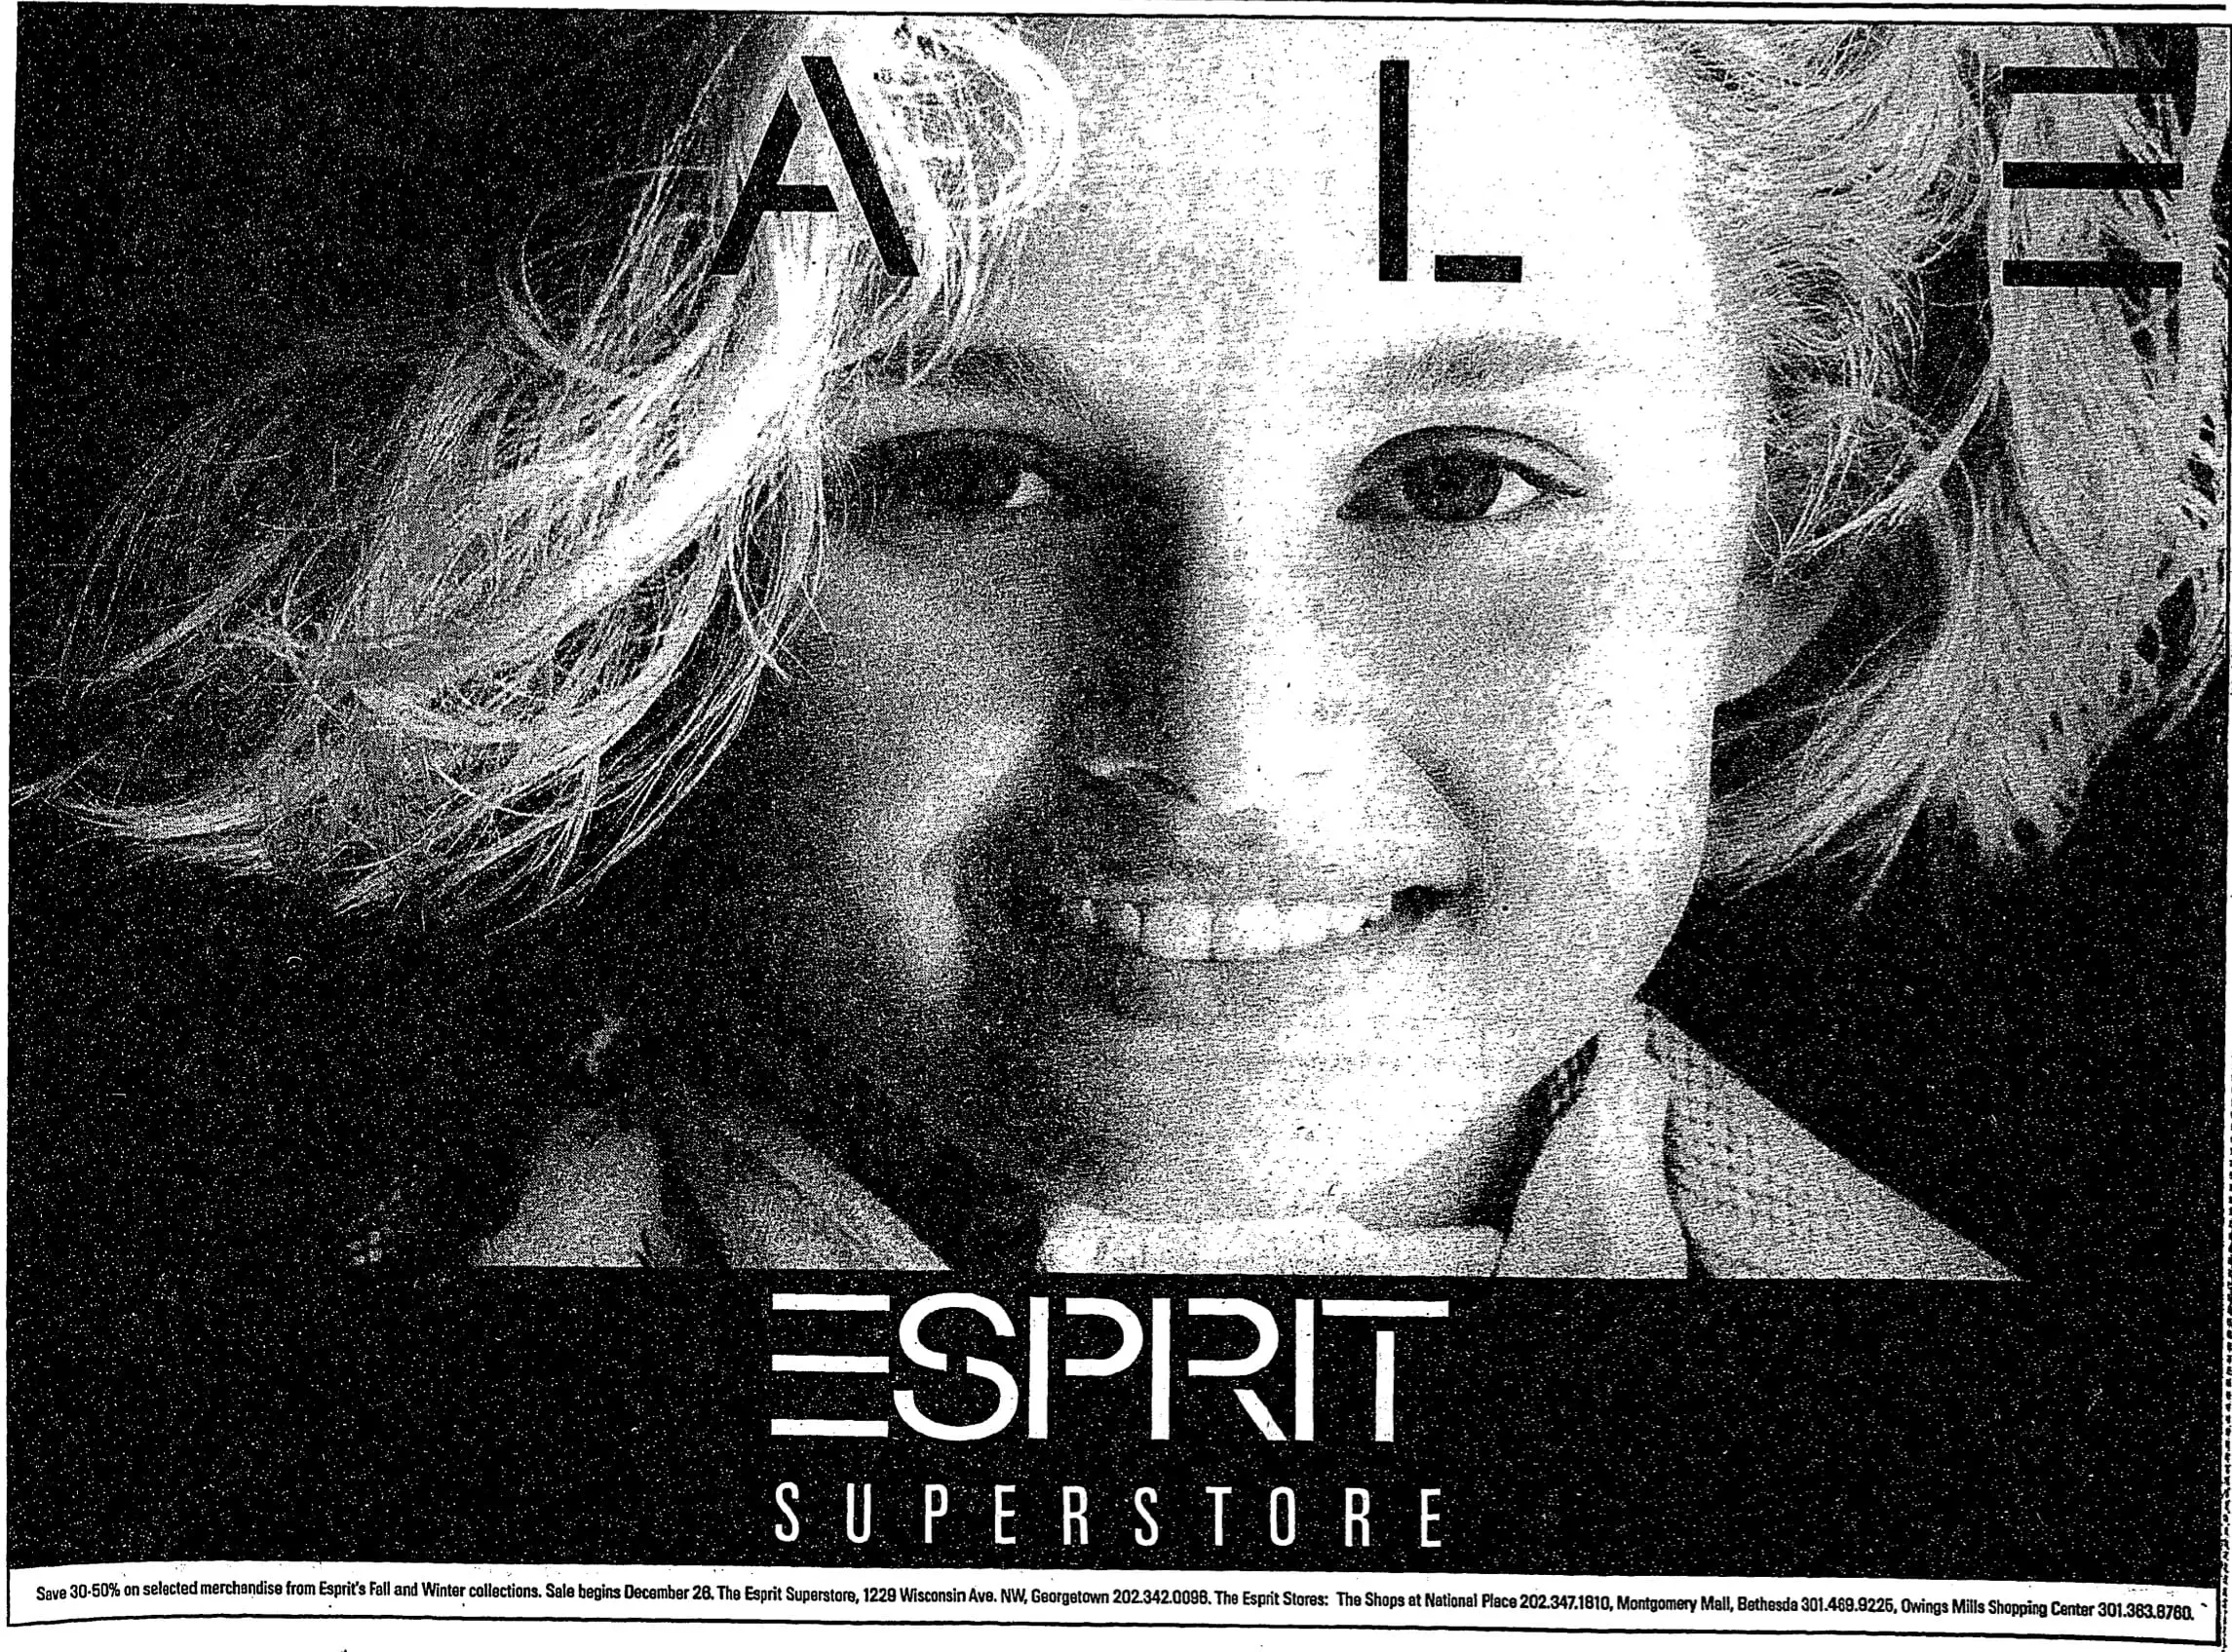 ESPRIT Superstore ad (Washington Post)